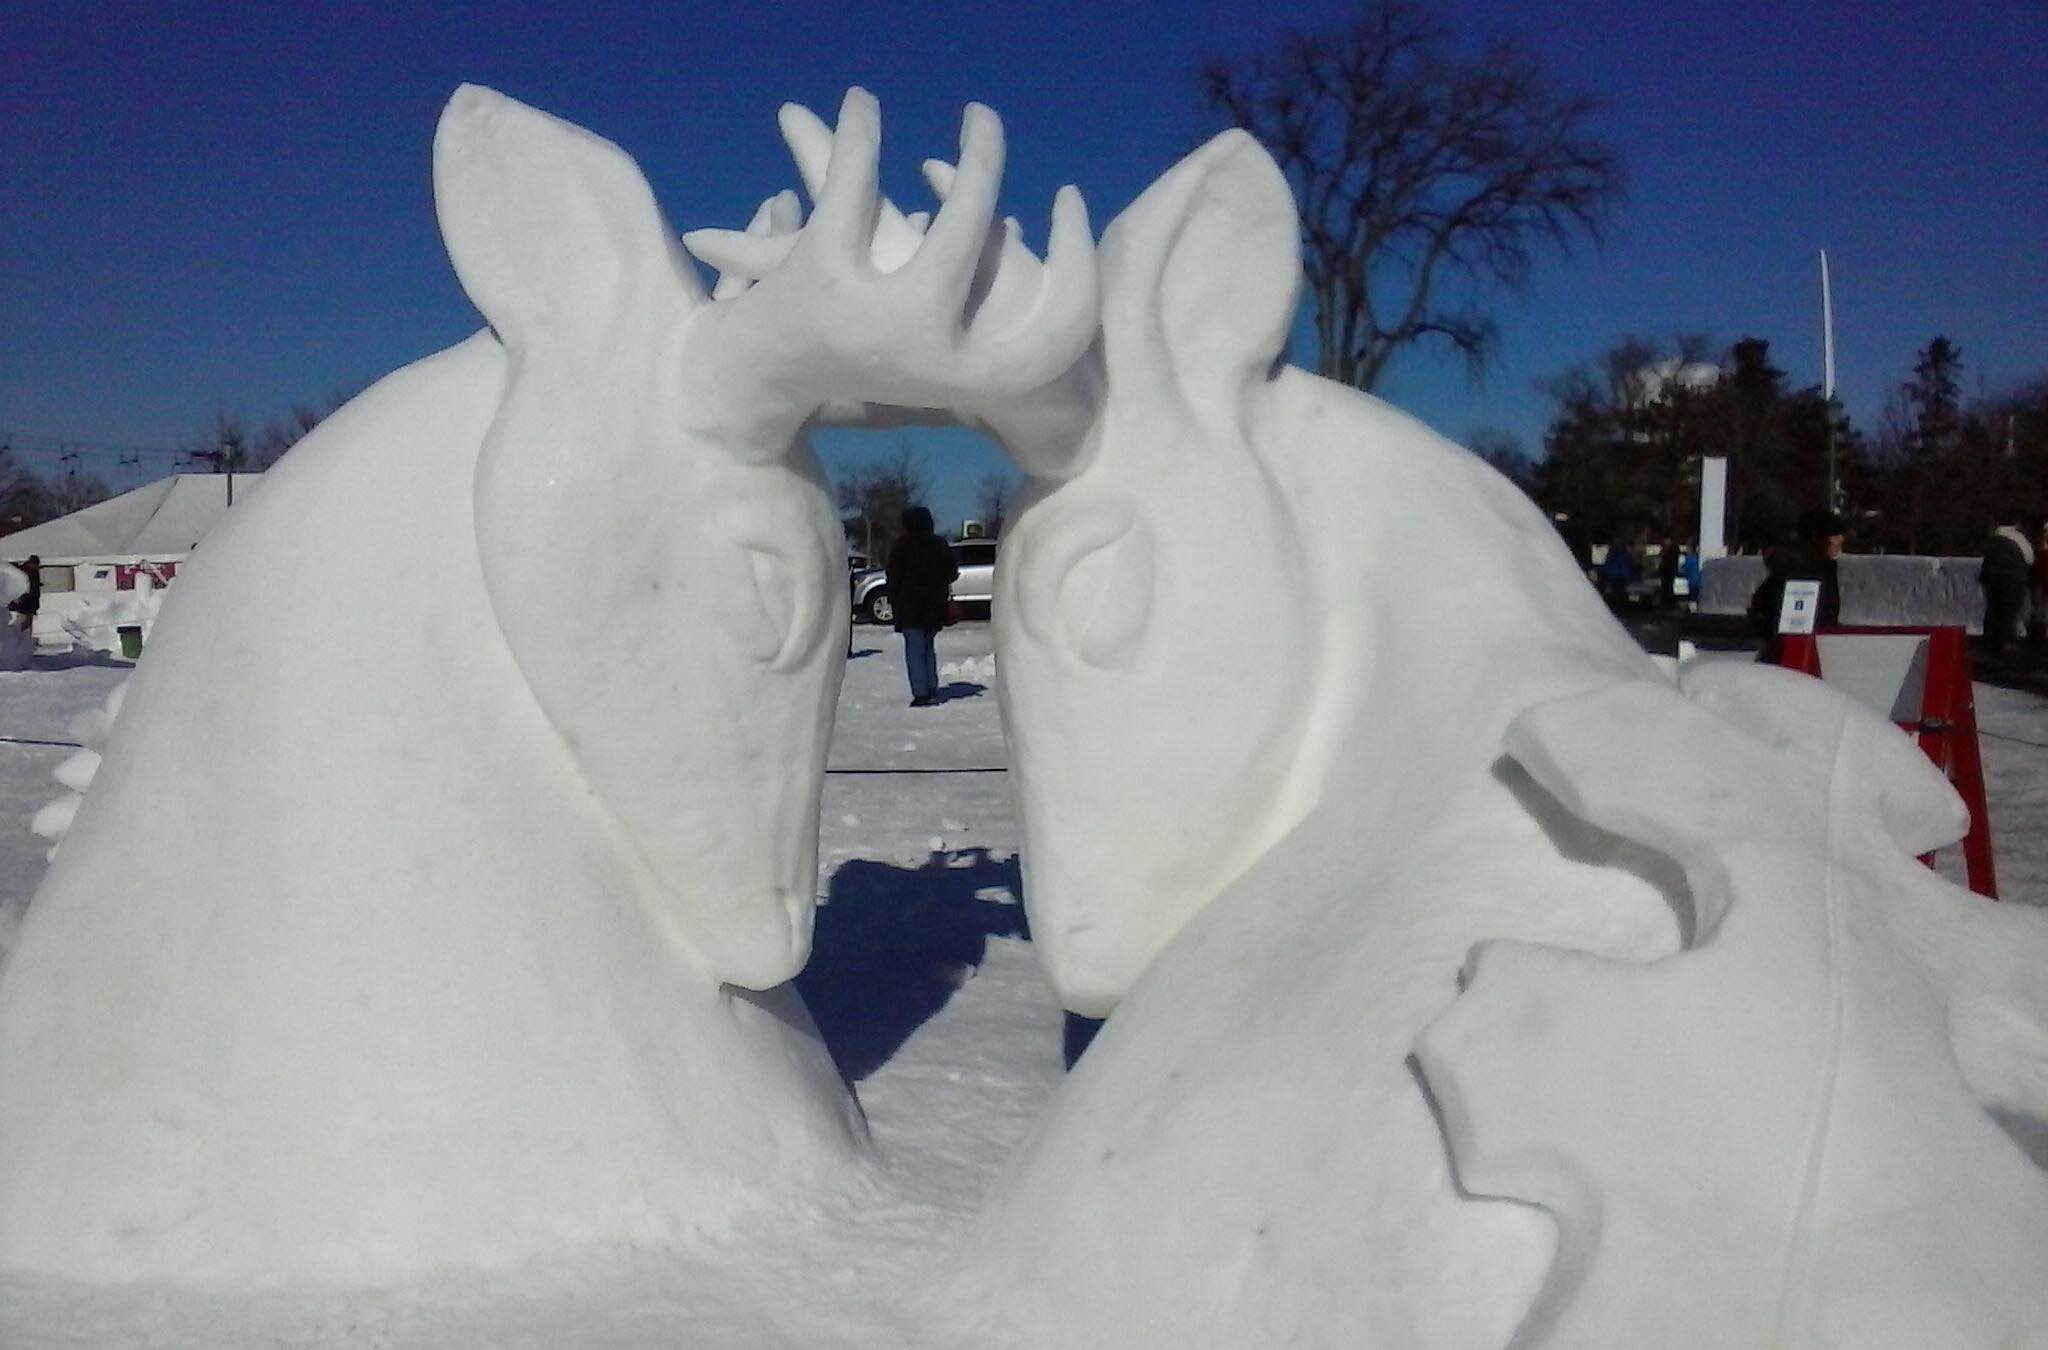   Two Bucks Fighting   10'x8'x10'  Snow Sculpture  St. Paul Winter Carnival  2015 